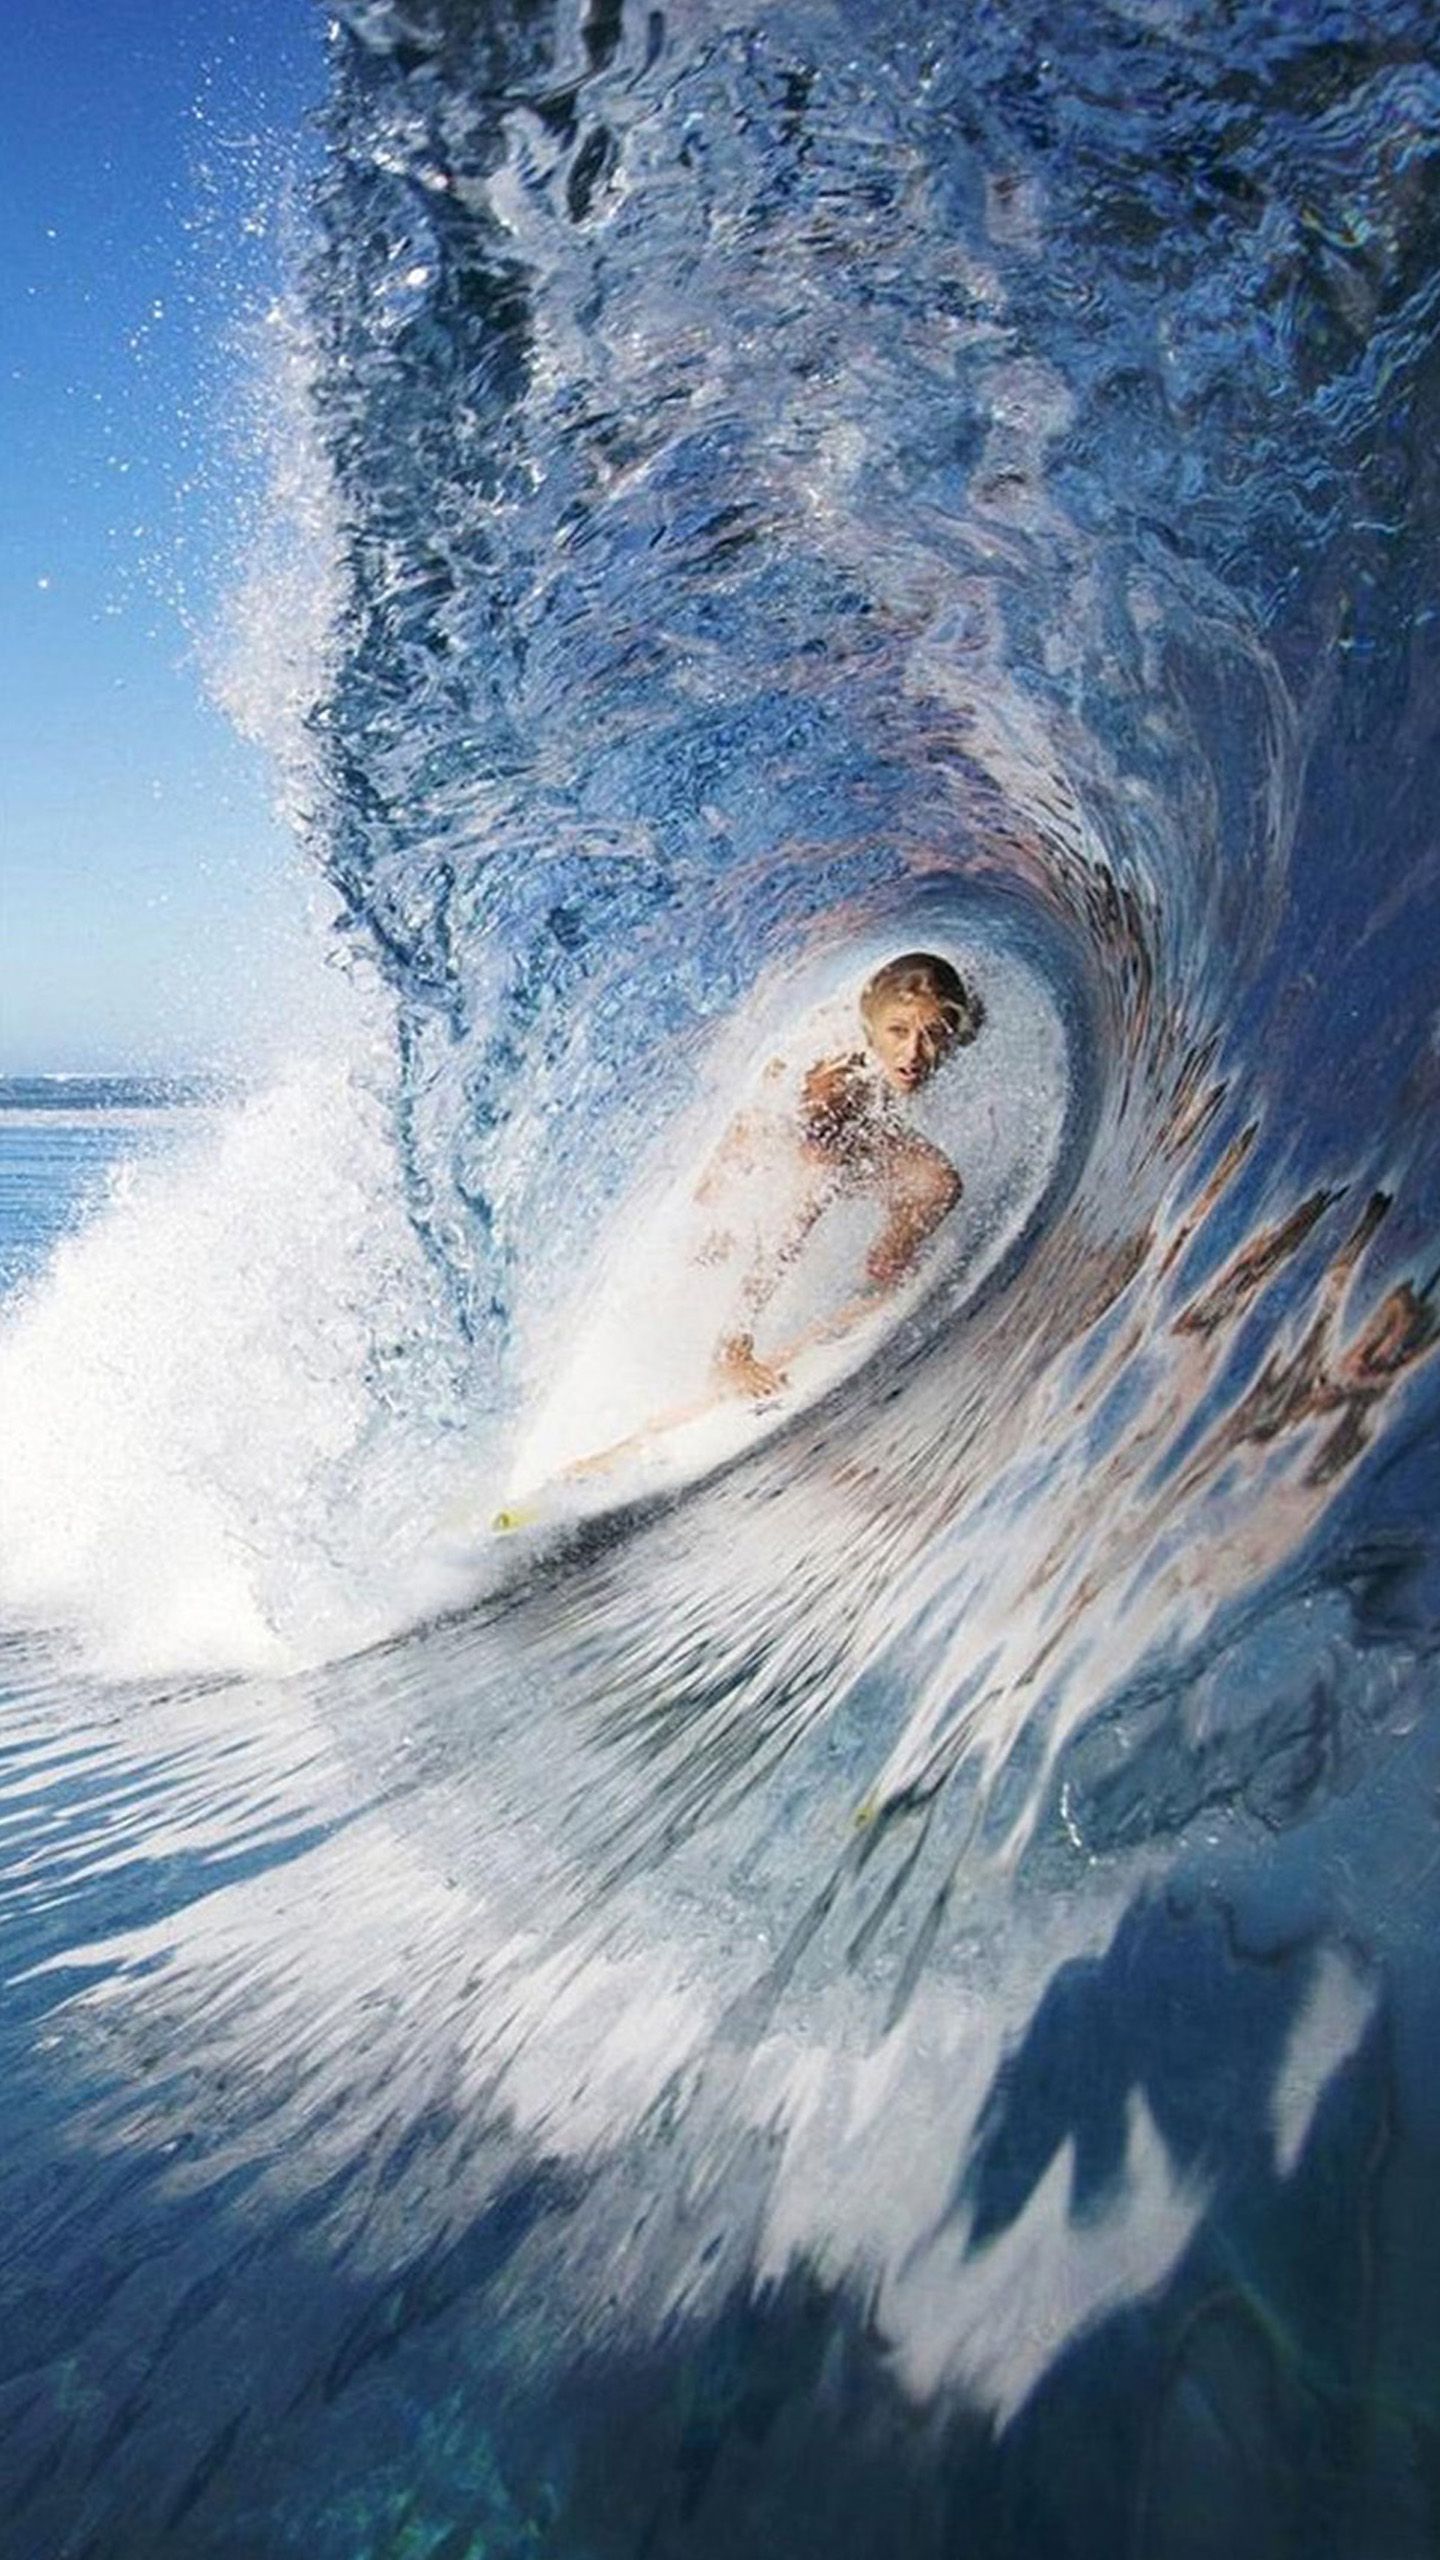 Surfing Image Wallpaper